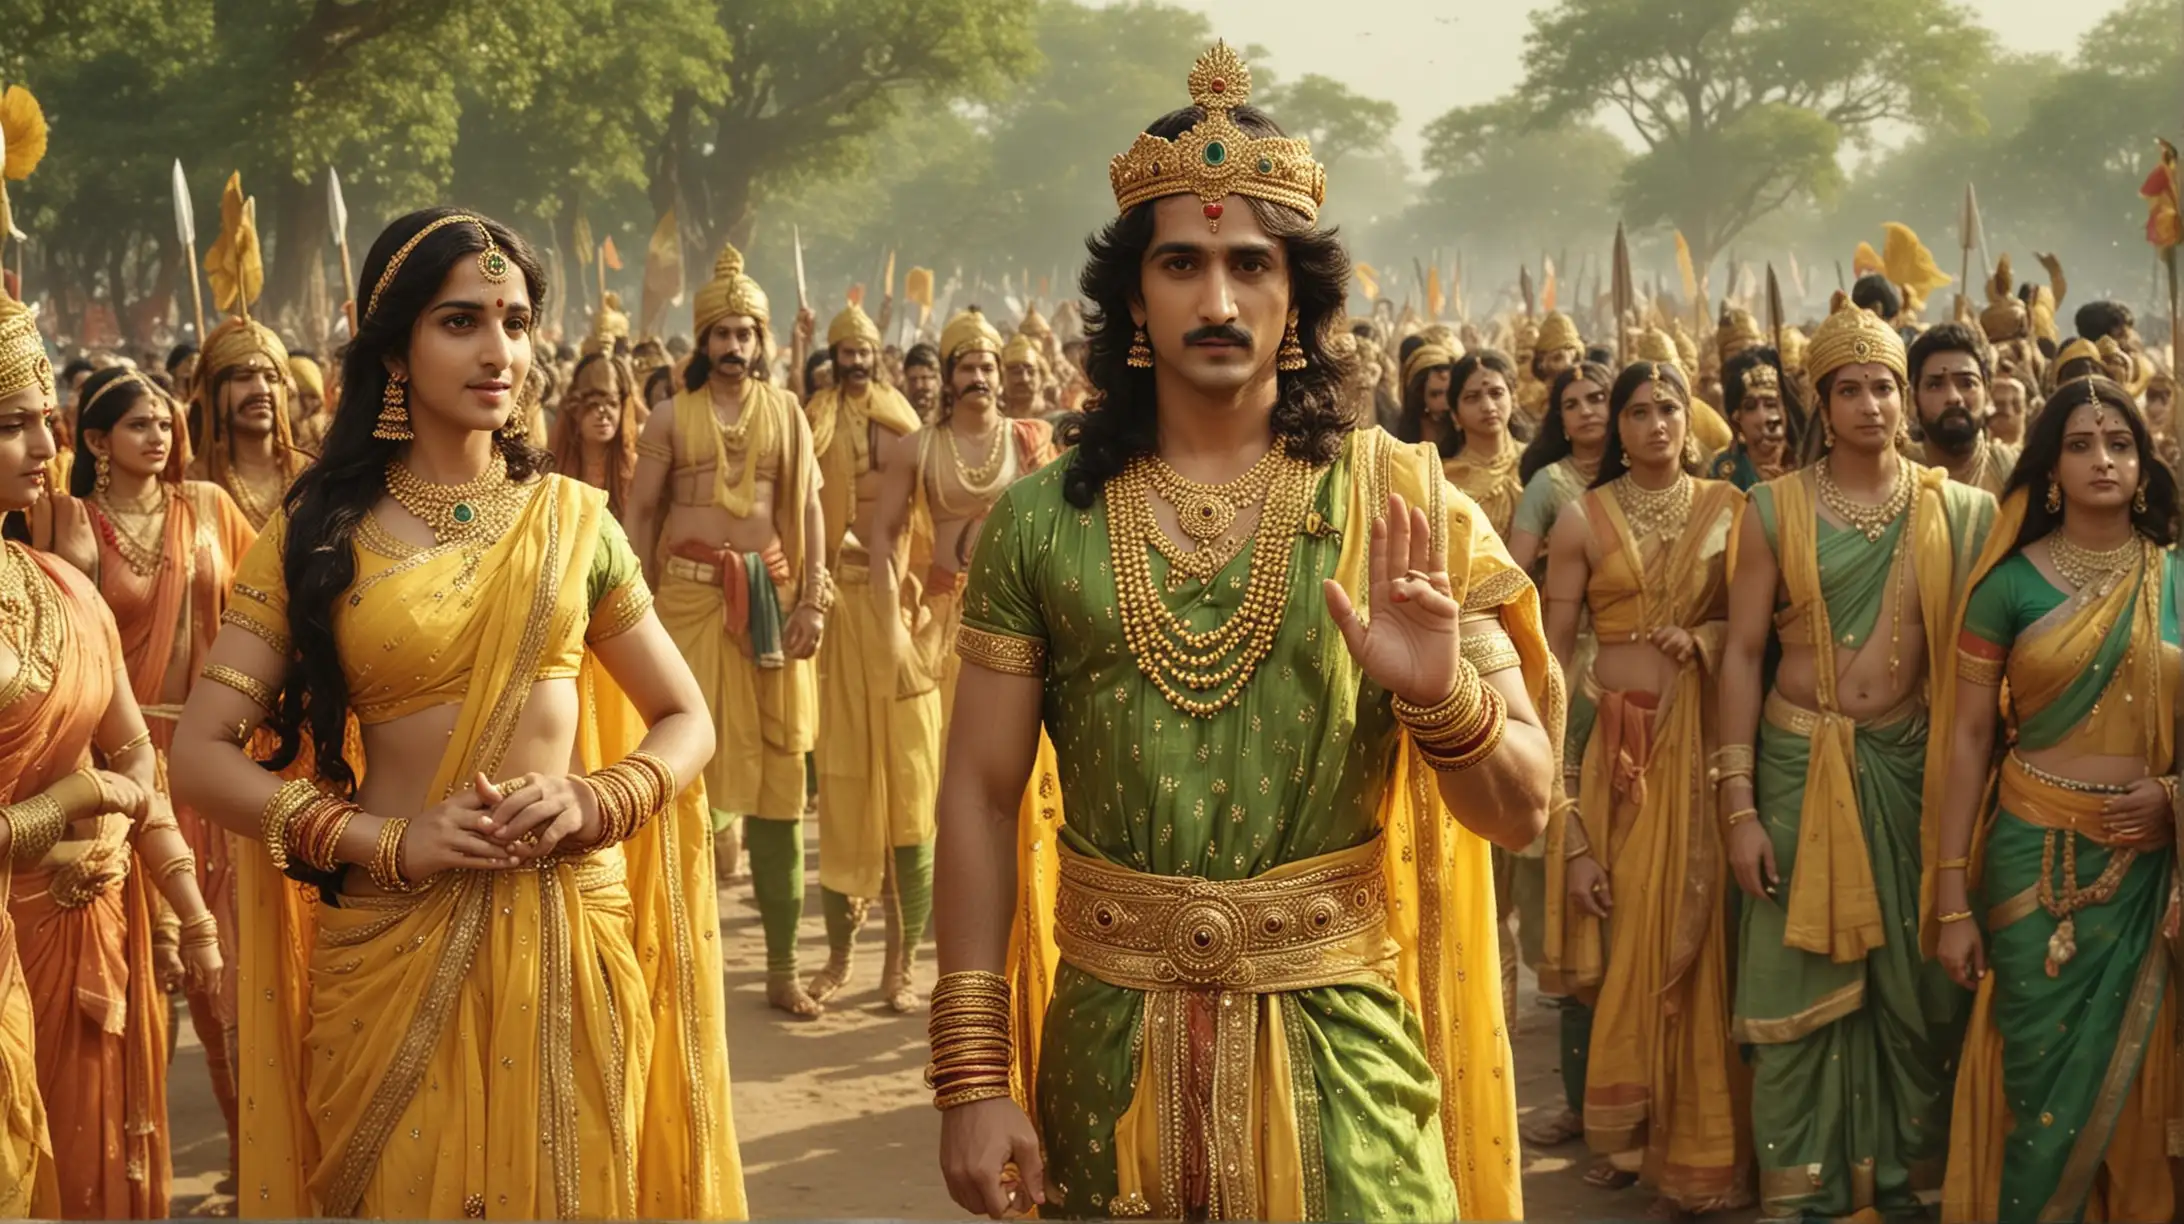 King Shantanu and Queen Satyavati in Vibrant Attire Mahabharata Depiction